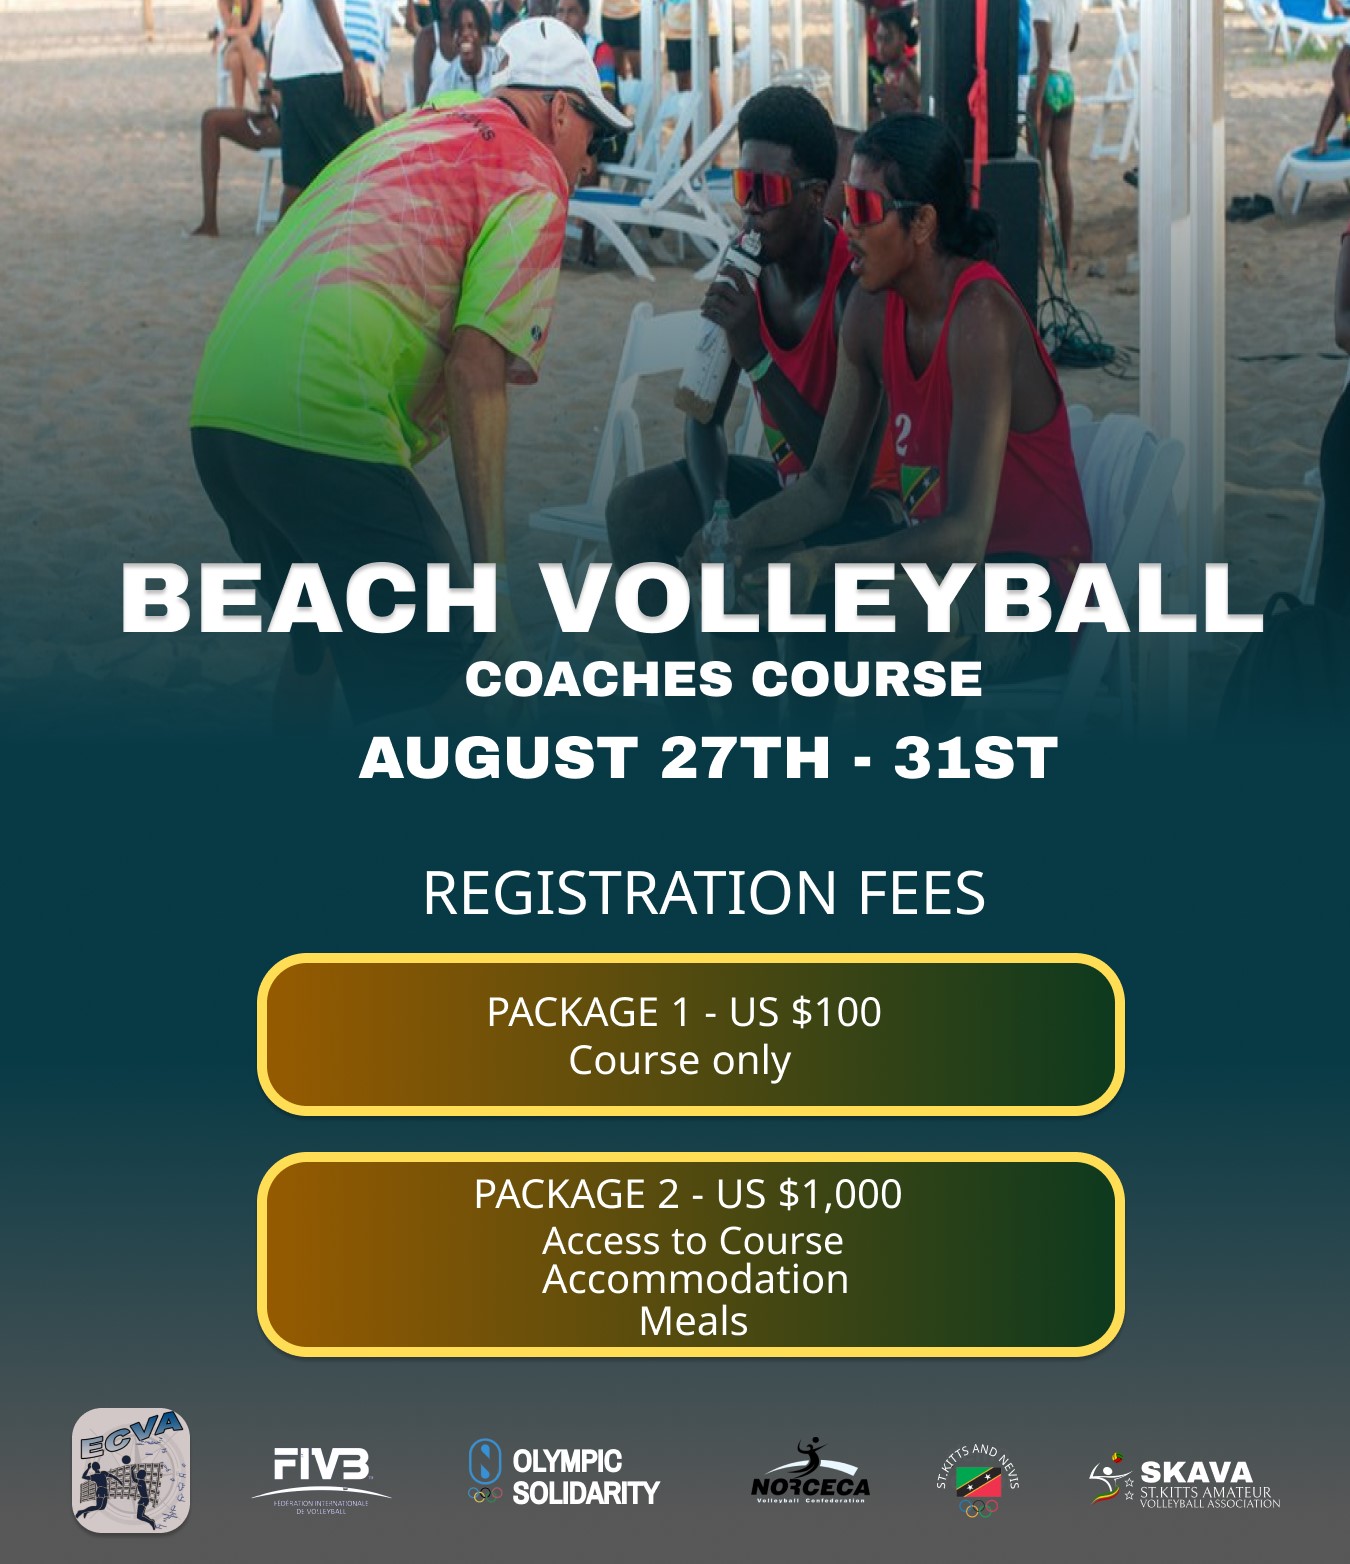 ECVA and SKAVA will host a Beach Volleyball Coaches Course